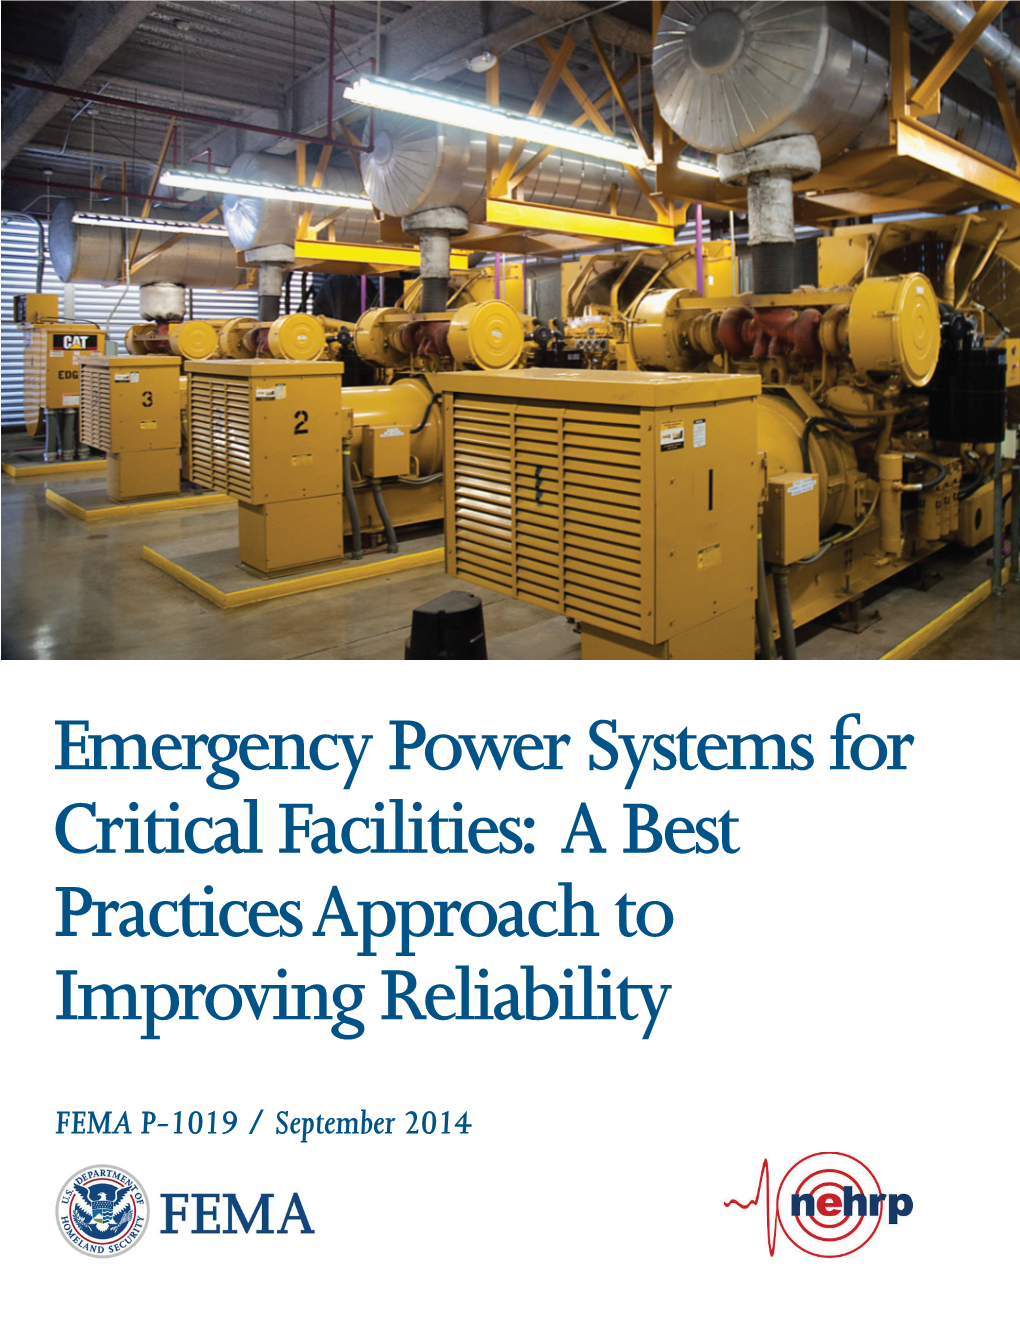 FEMA P-1019 Emergency Power Systems for Critical Facilities